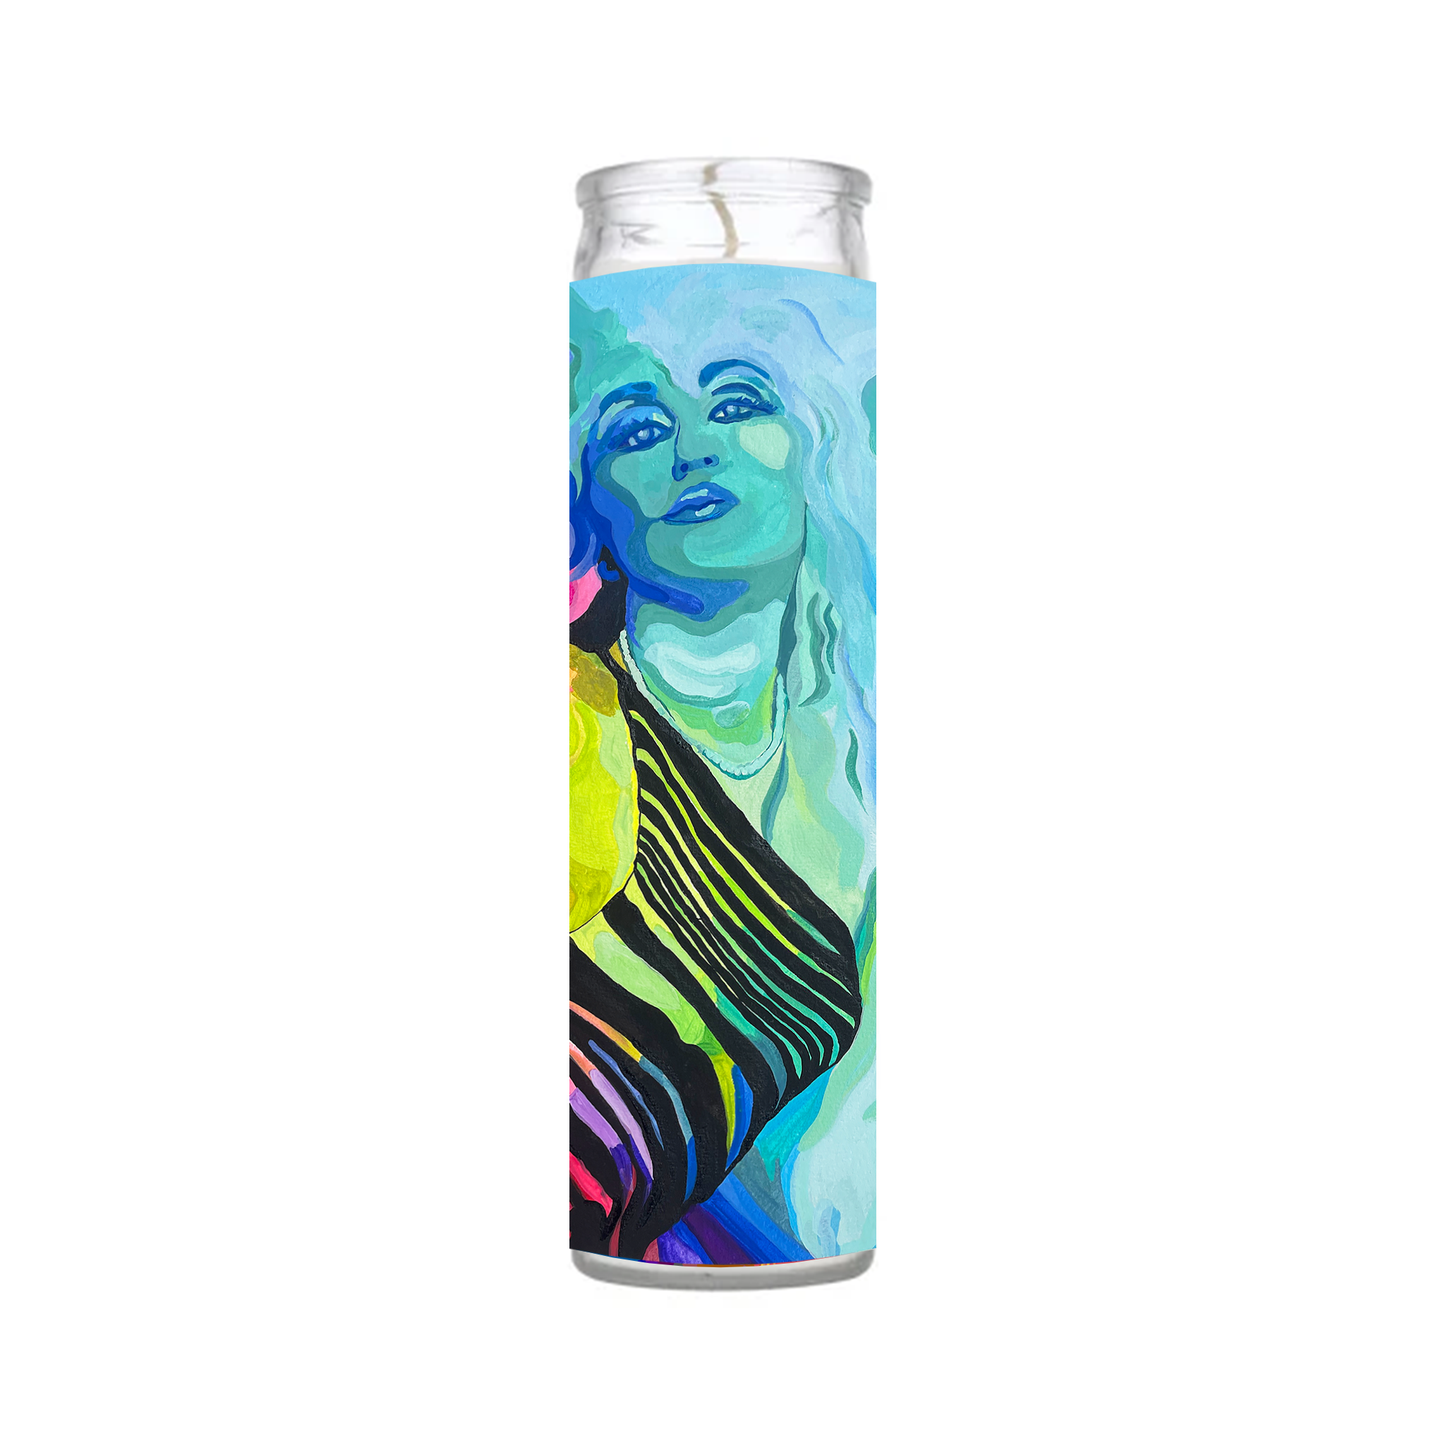 Miley Cyrus Goddess Prayer Candle